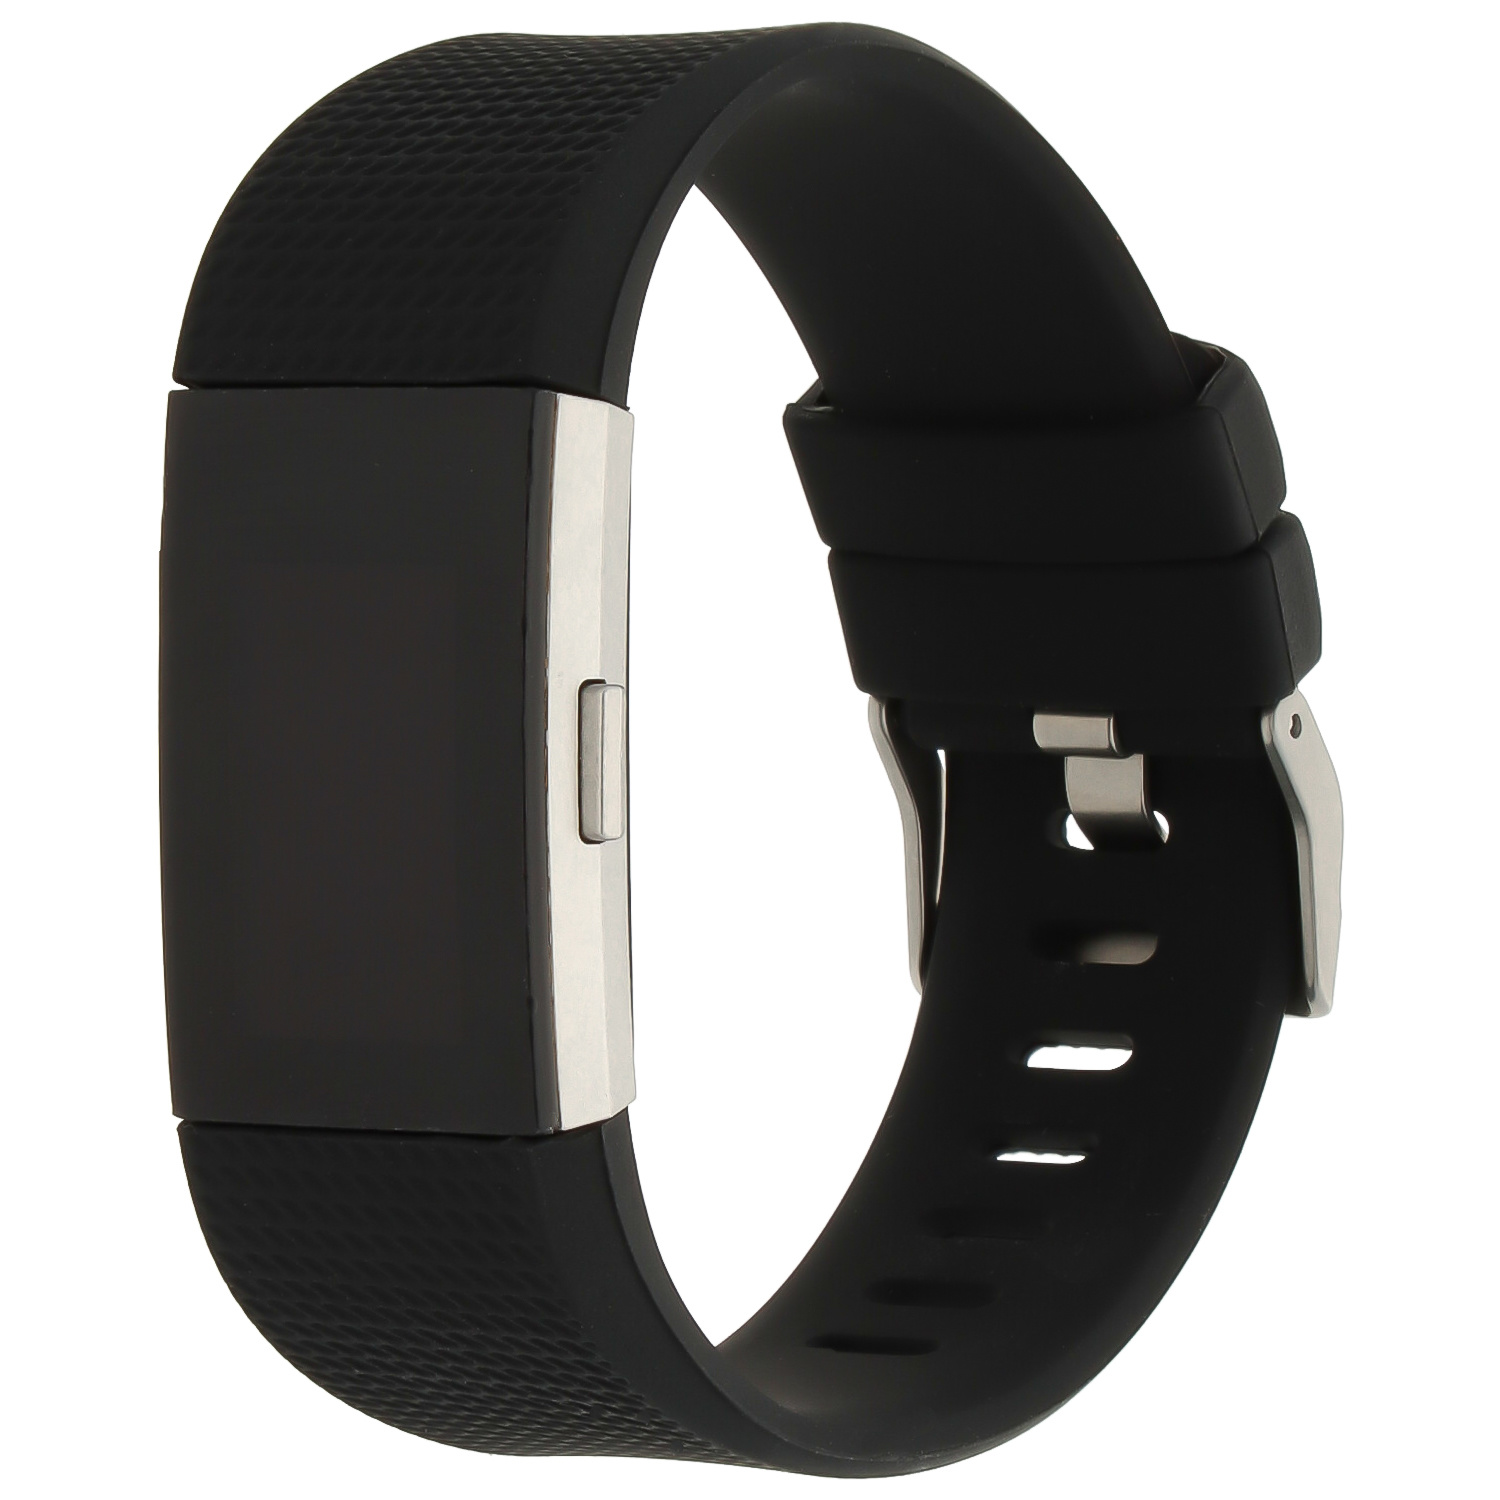 Onverenigbaar zwavel Reizende handelaar Goedkope Fitbit charge 2 sport band - zwart - 123watches B.V.